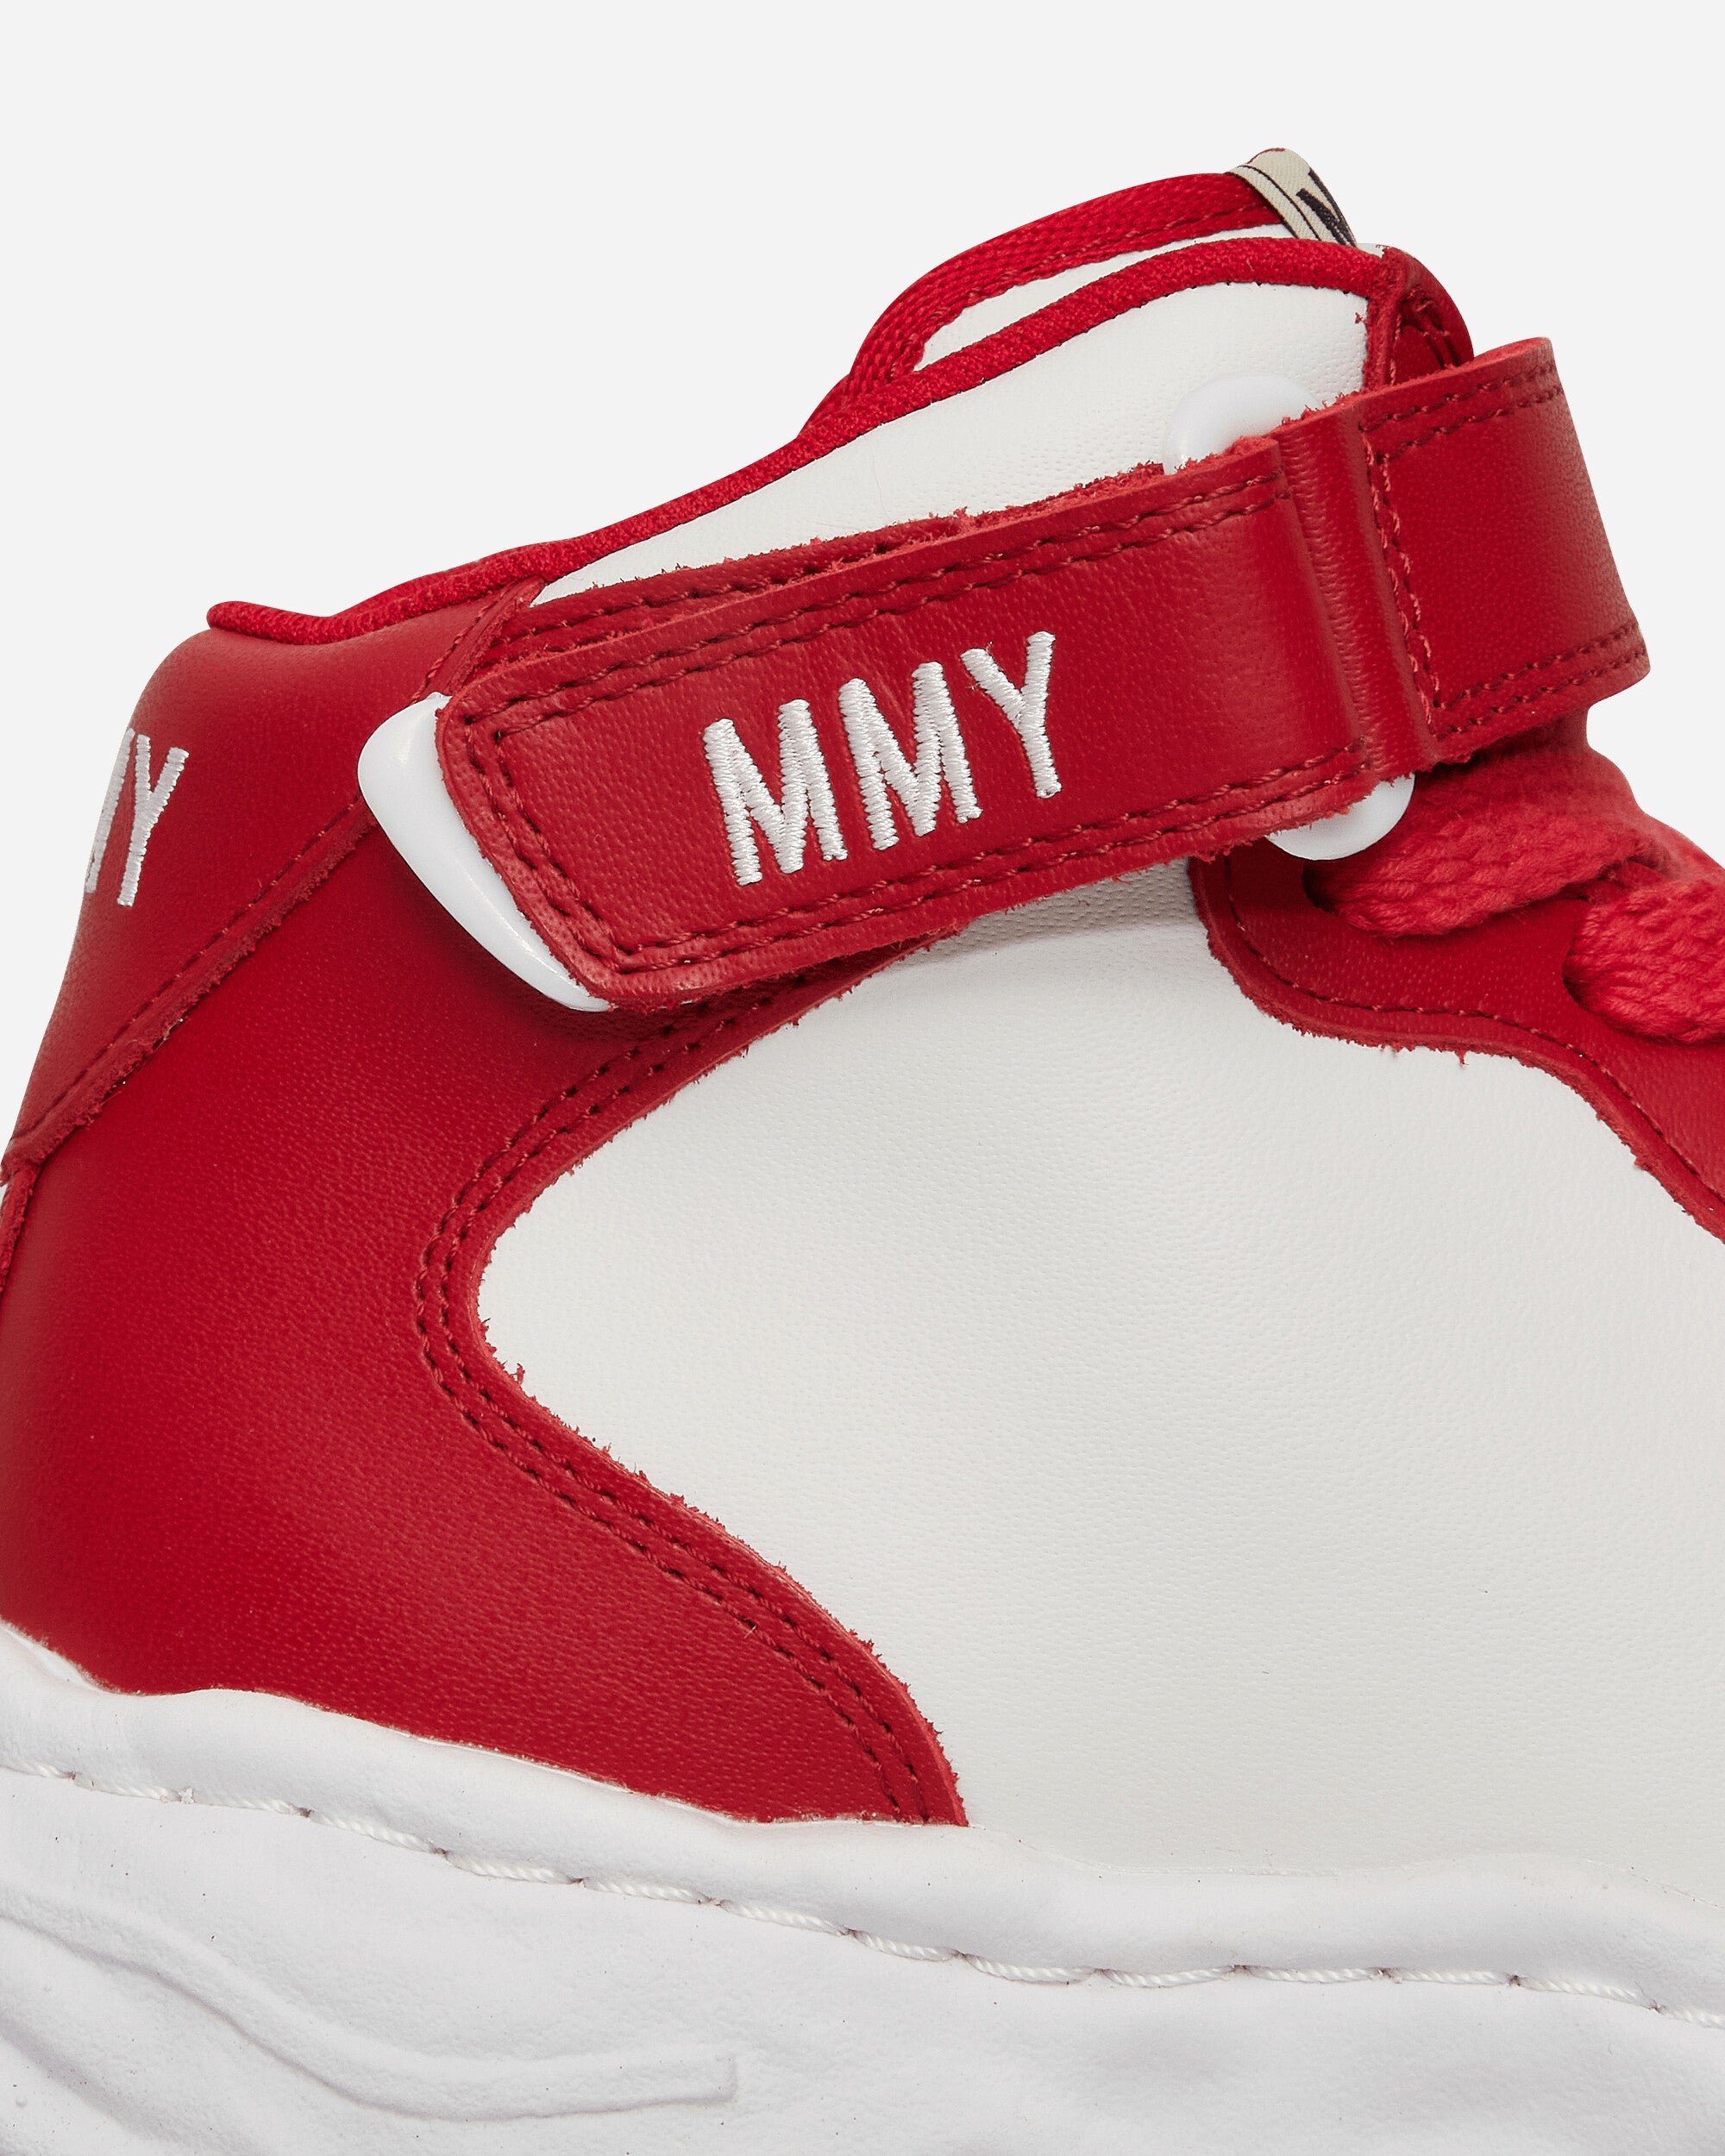 Maison MIHARA YASUHIRO Wayne High Red/White Sneakers Mid A08FW705 REDWHITE